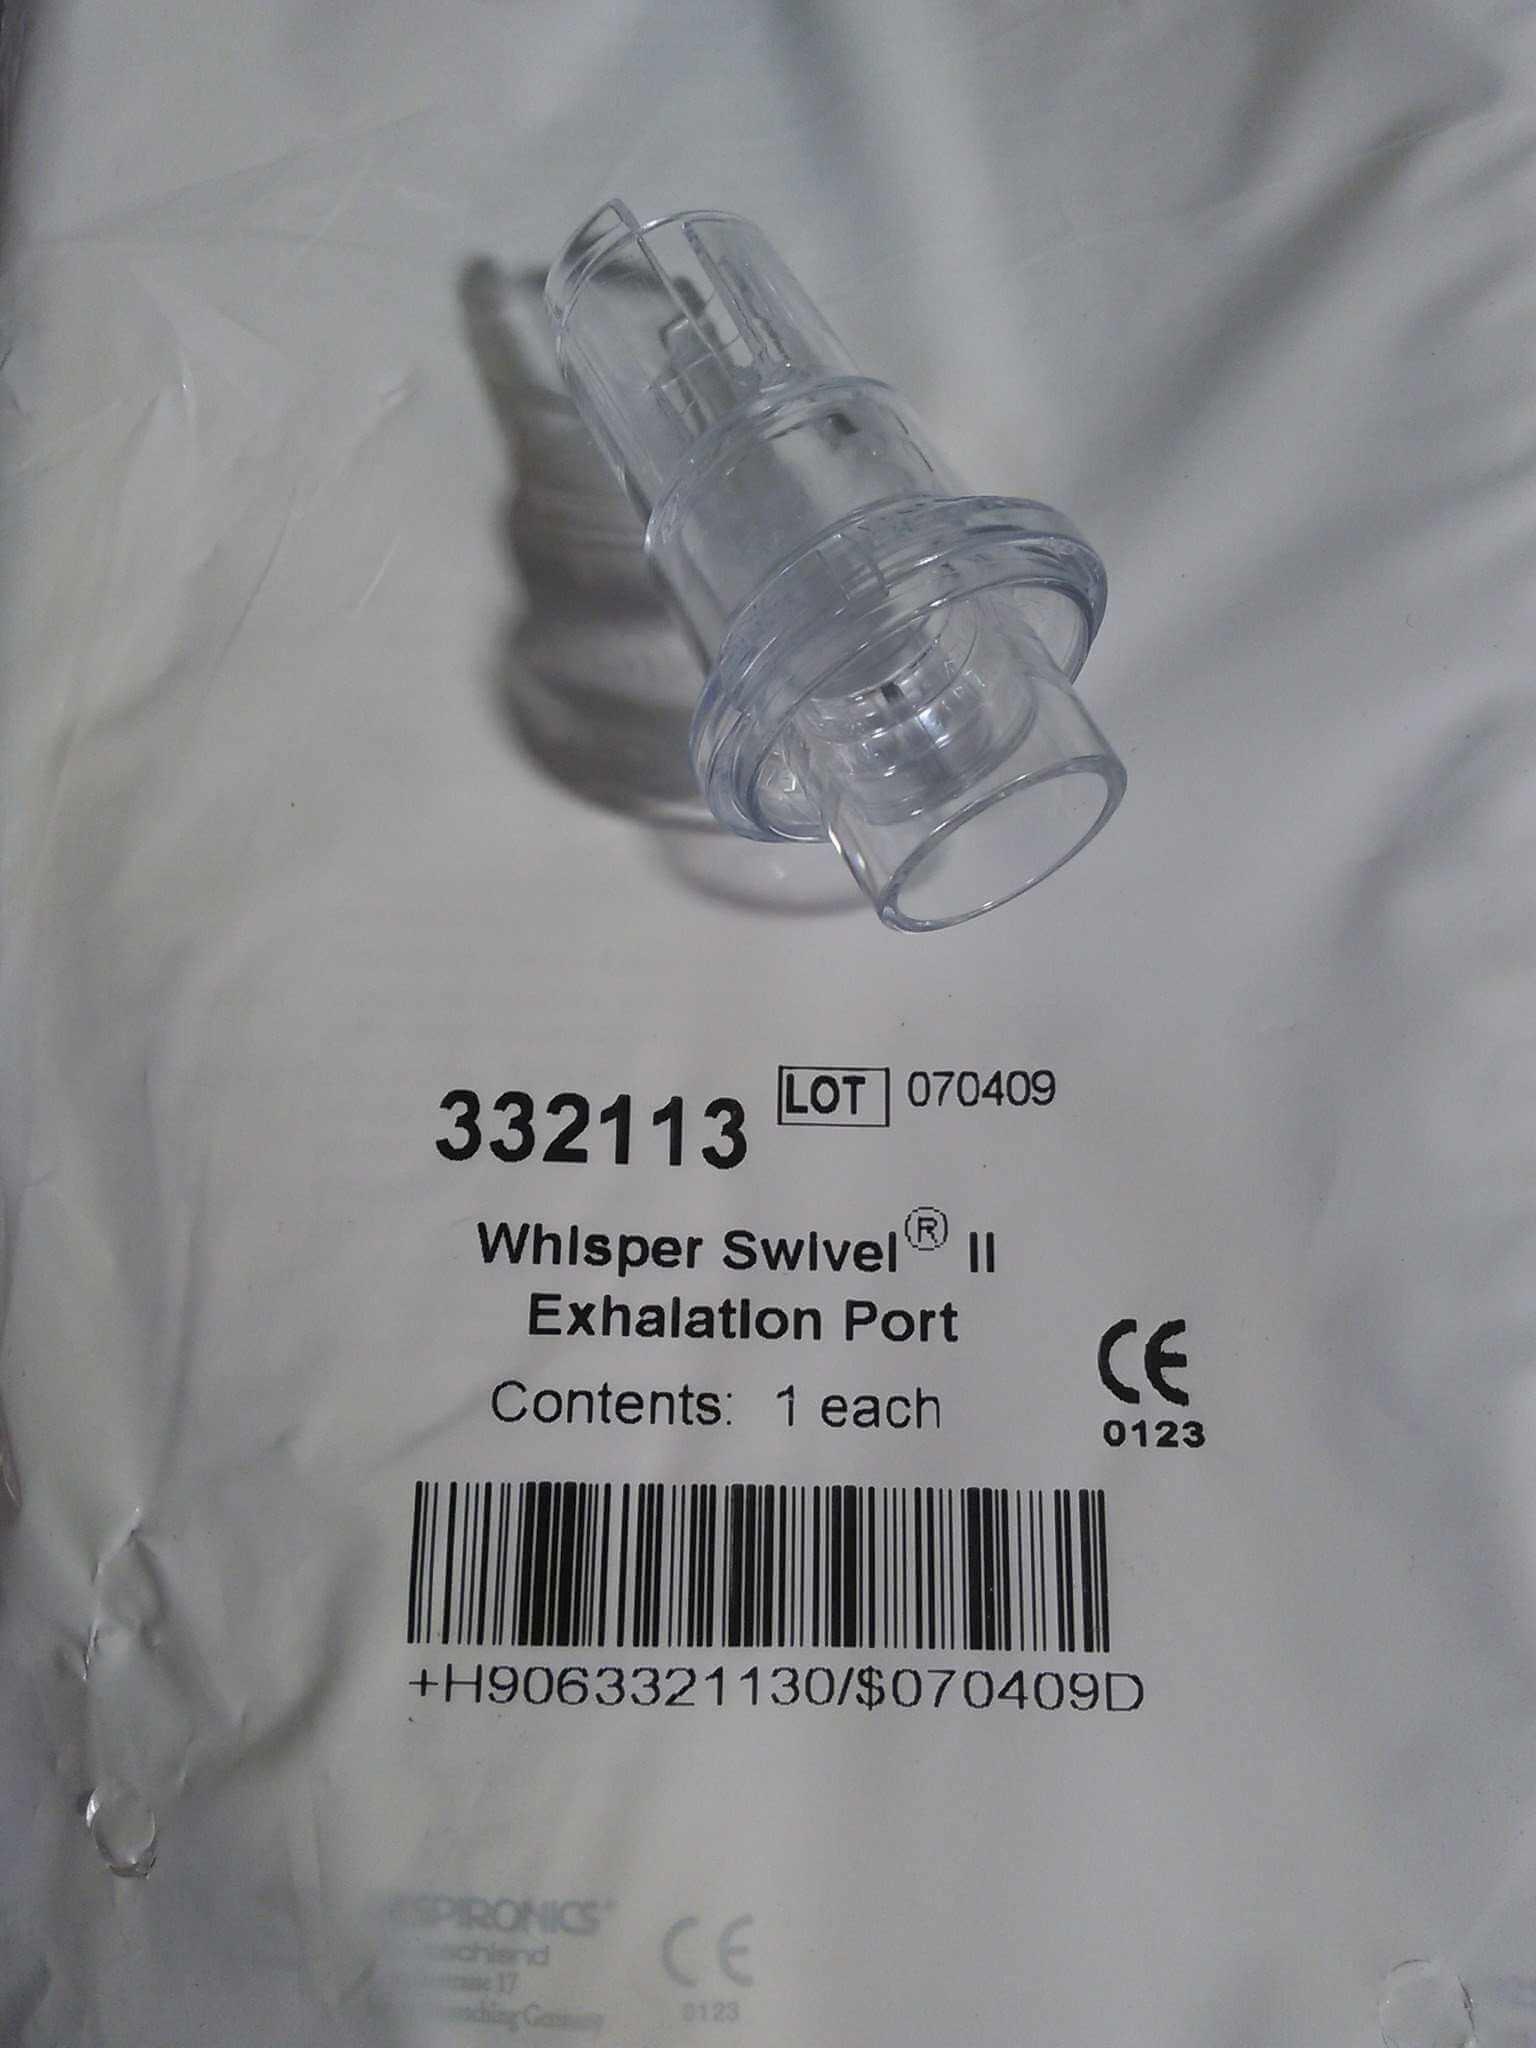 NEW Philips Respironics Whisper Swivel II Exhalation Valve Whisper 332113 - MBR Medicals